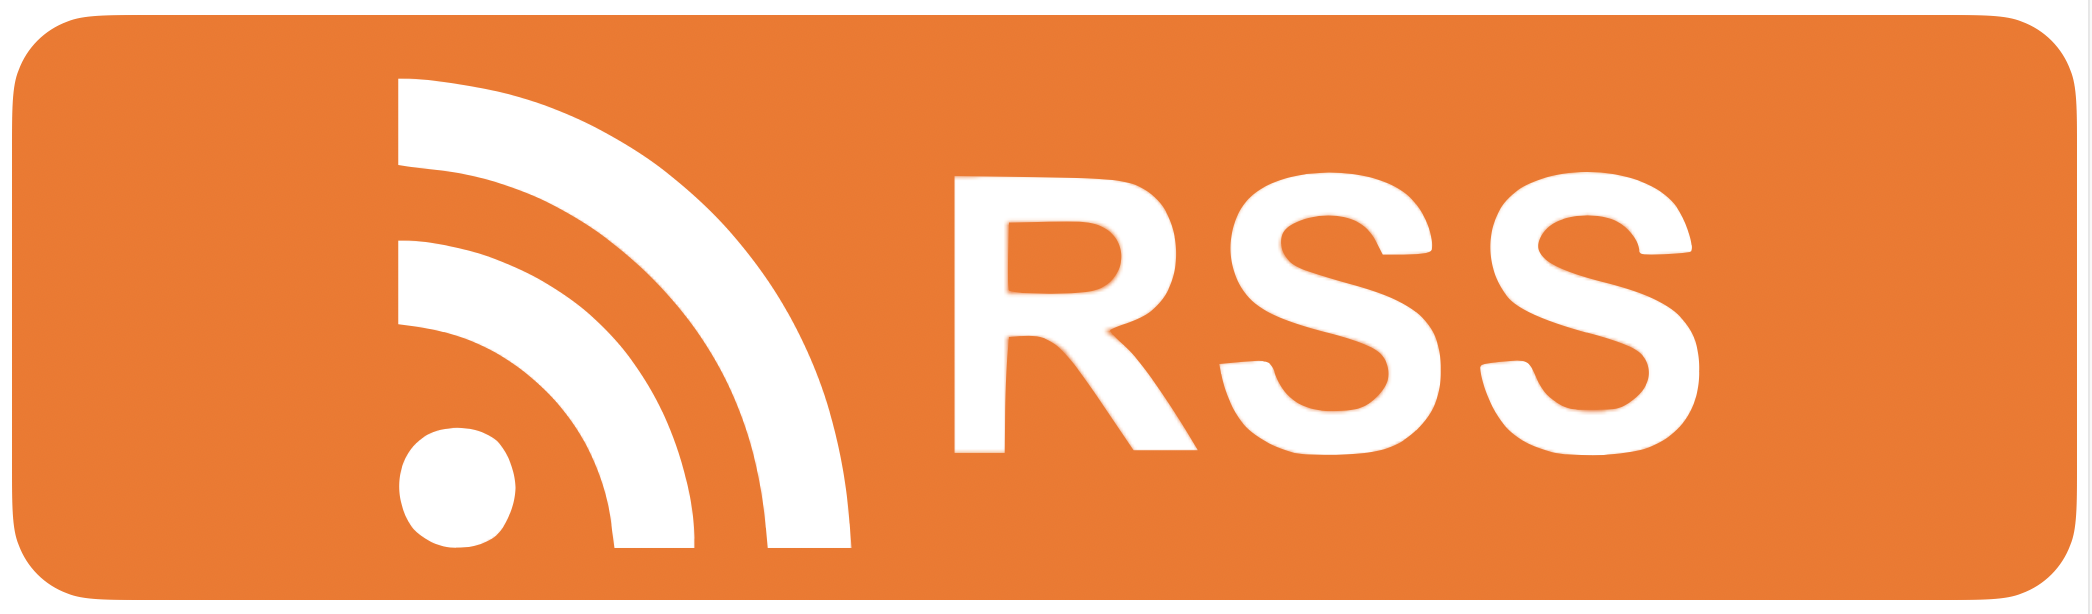 RSS Podcast logo